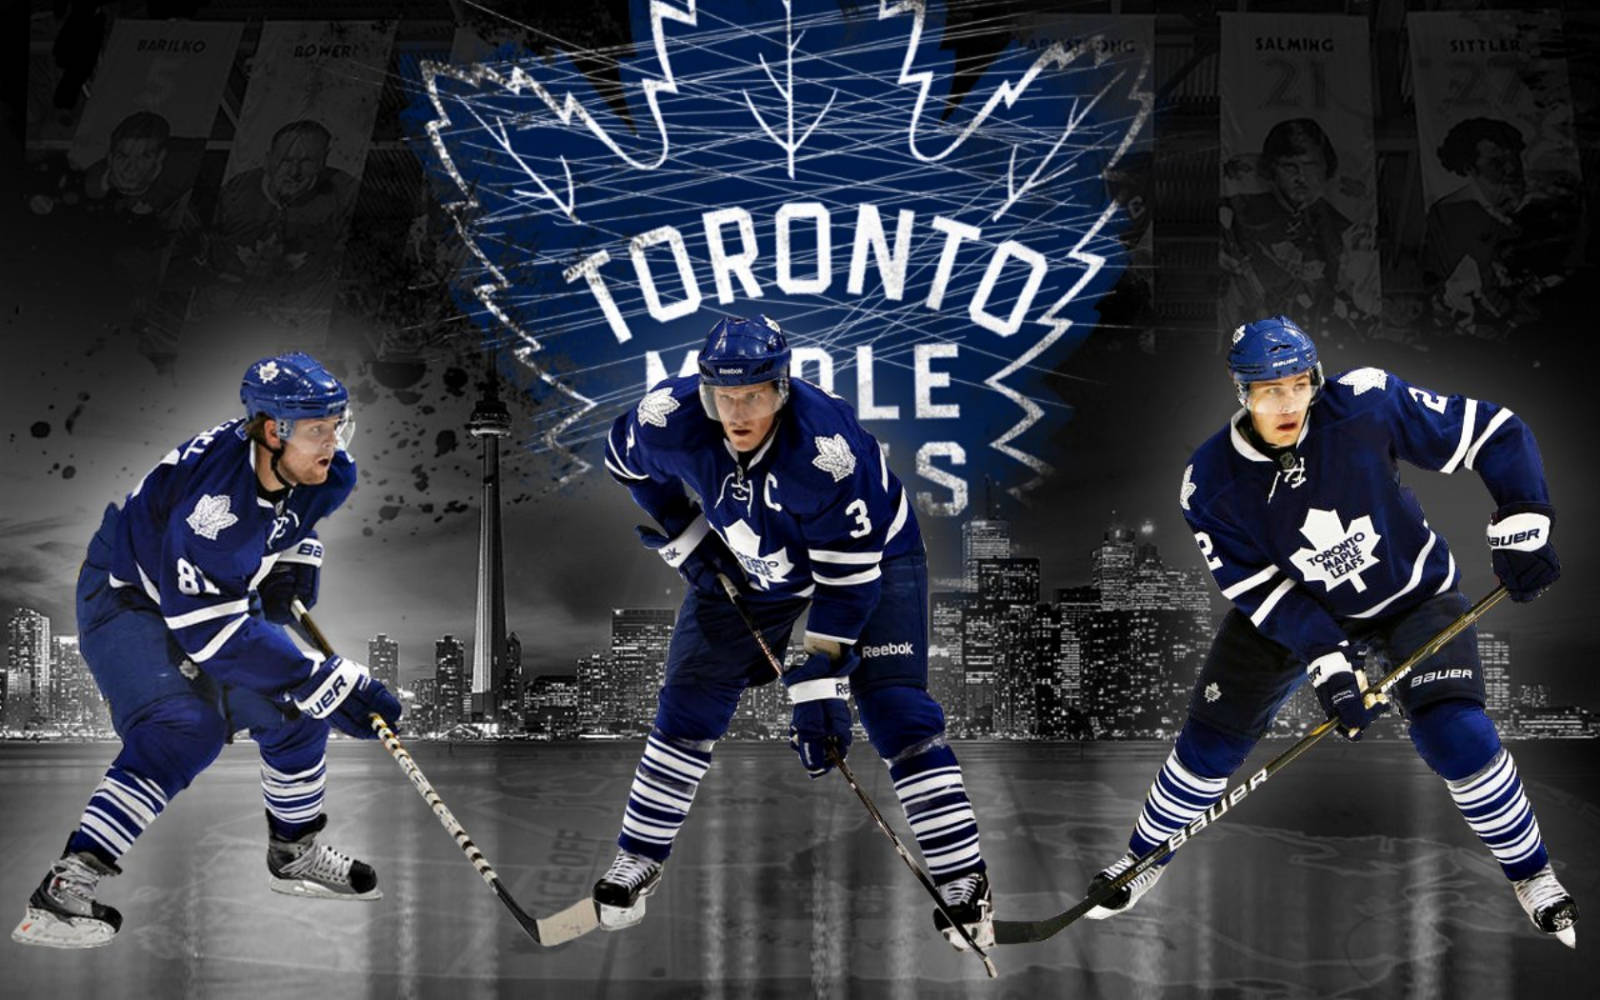 Download John Tavares Toronto Maple Leafs NHL Wallpaper